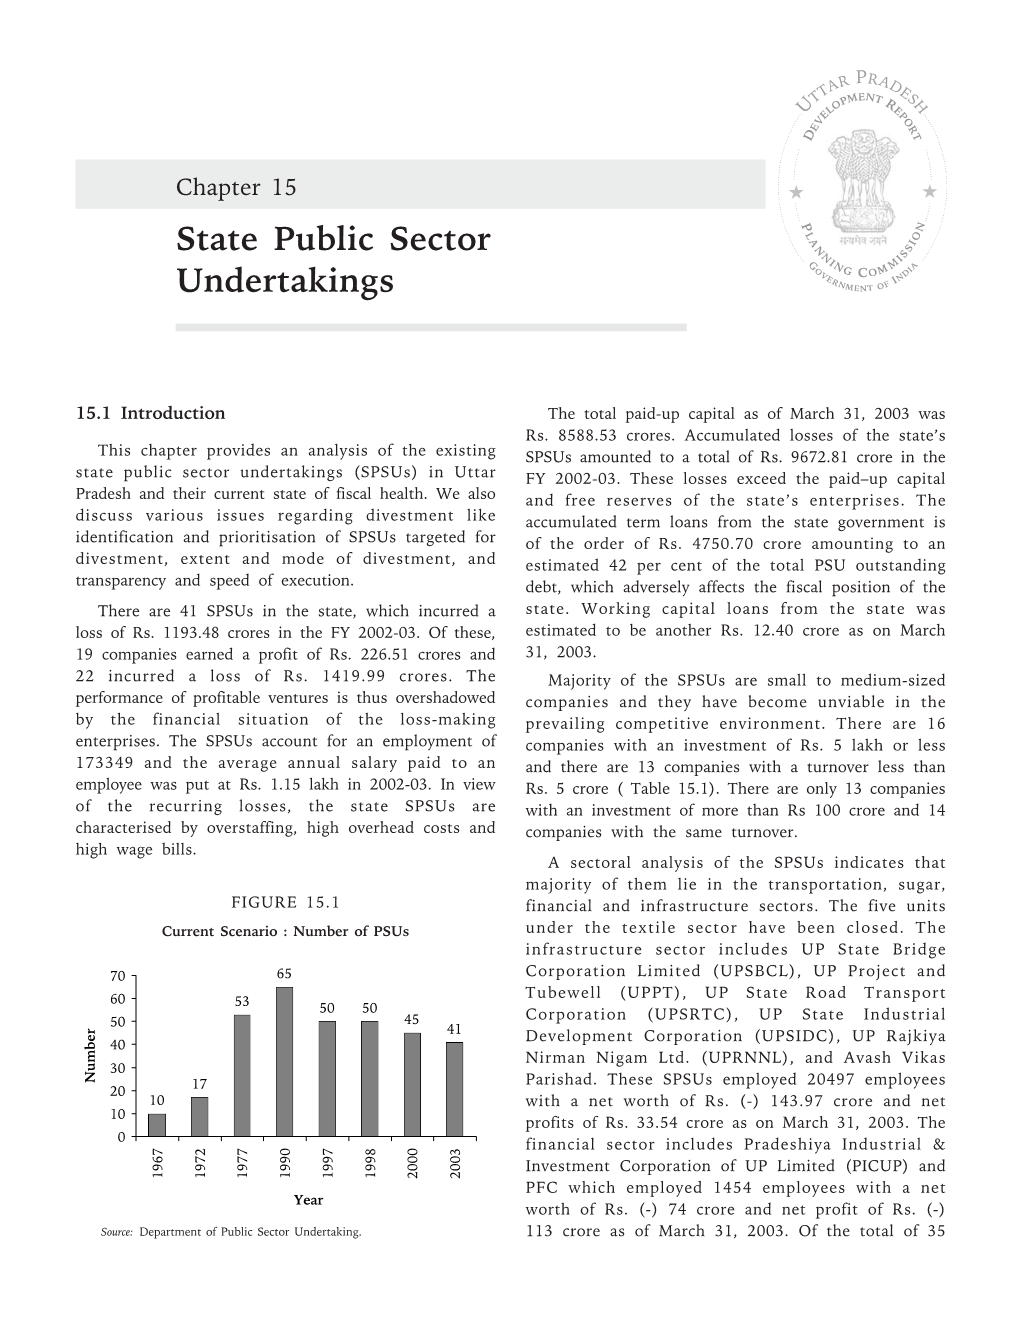 State Public Sector Undertakings